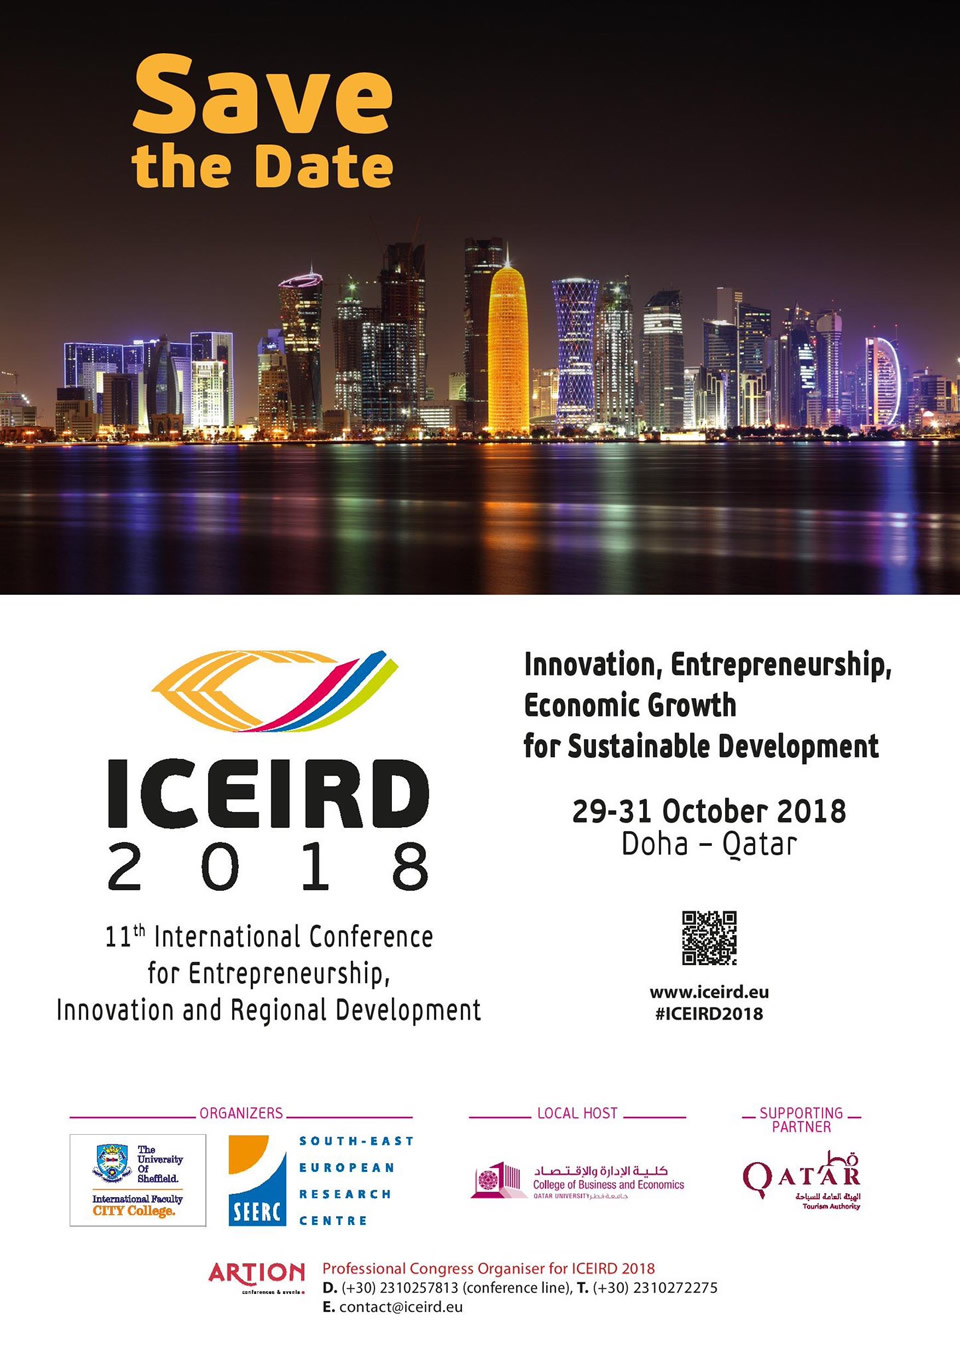 11th International Conference for Entrepreneurship, Innovation and Regional Development (ICEIRD 2018)